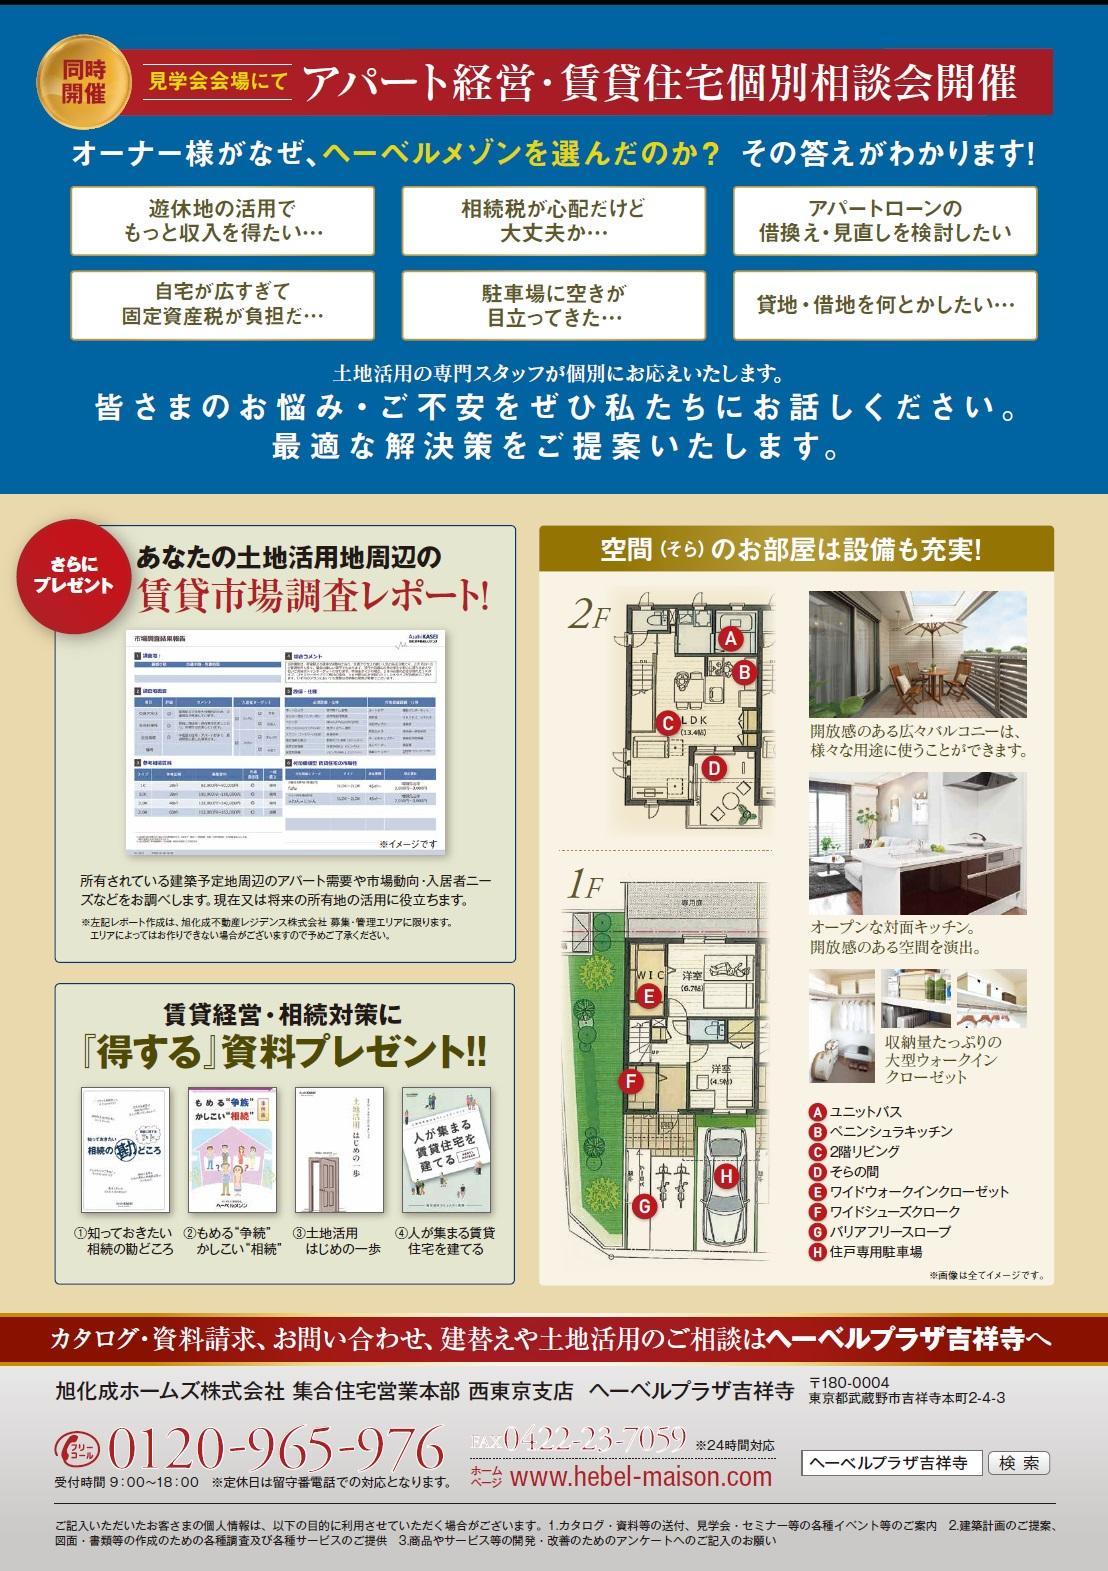 https://www.asahi-kasei.co.jp/maison/hebelplaza/blog/18/kichijoji/item/2019/191121-2.jpg